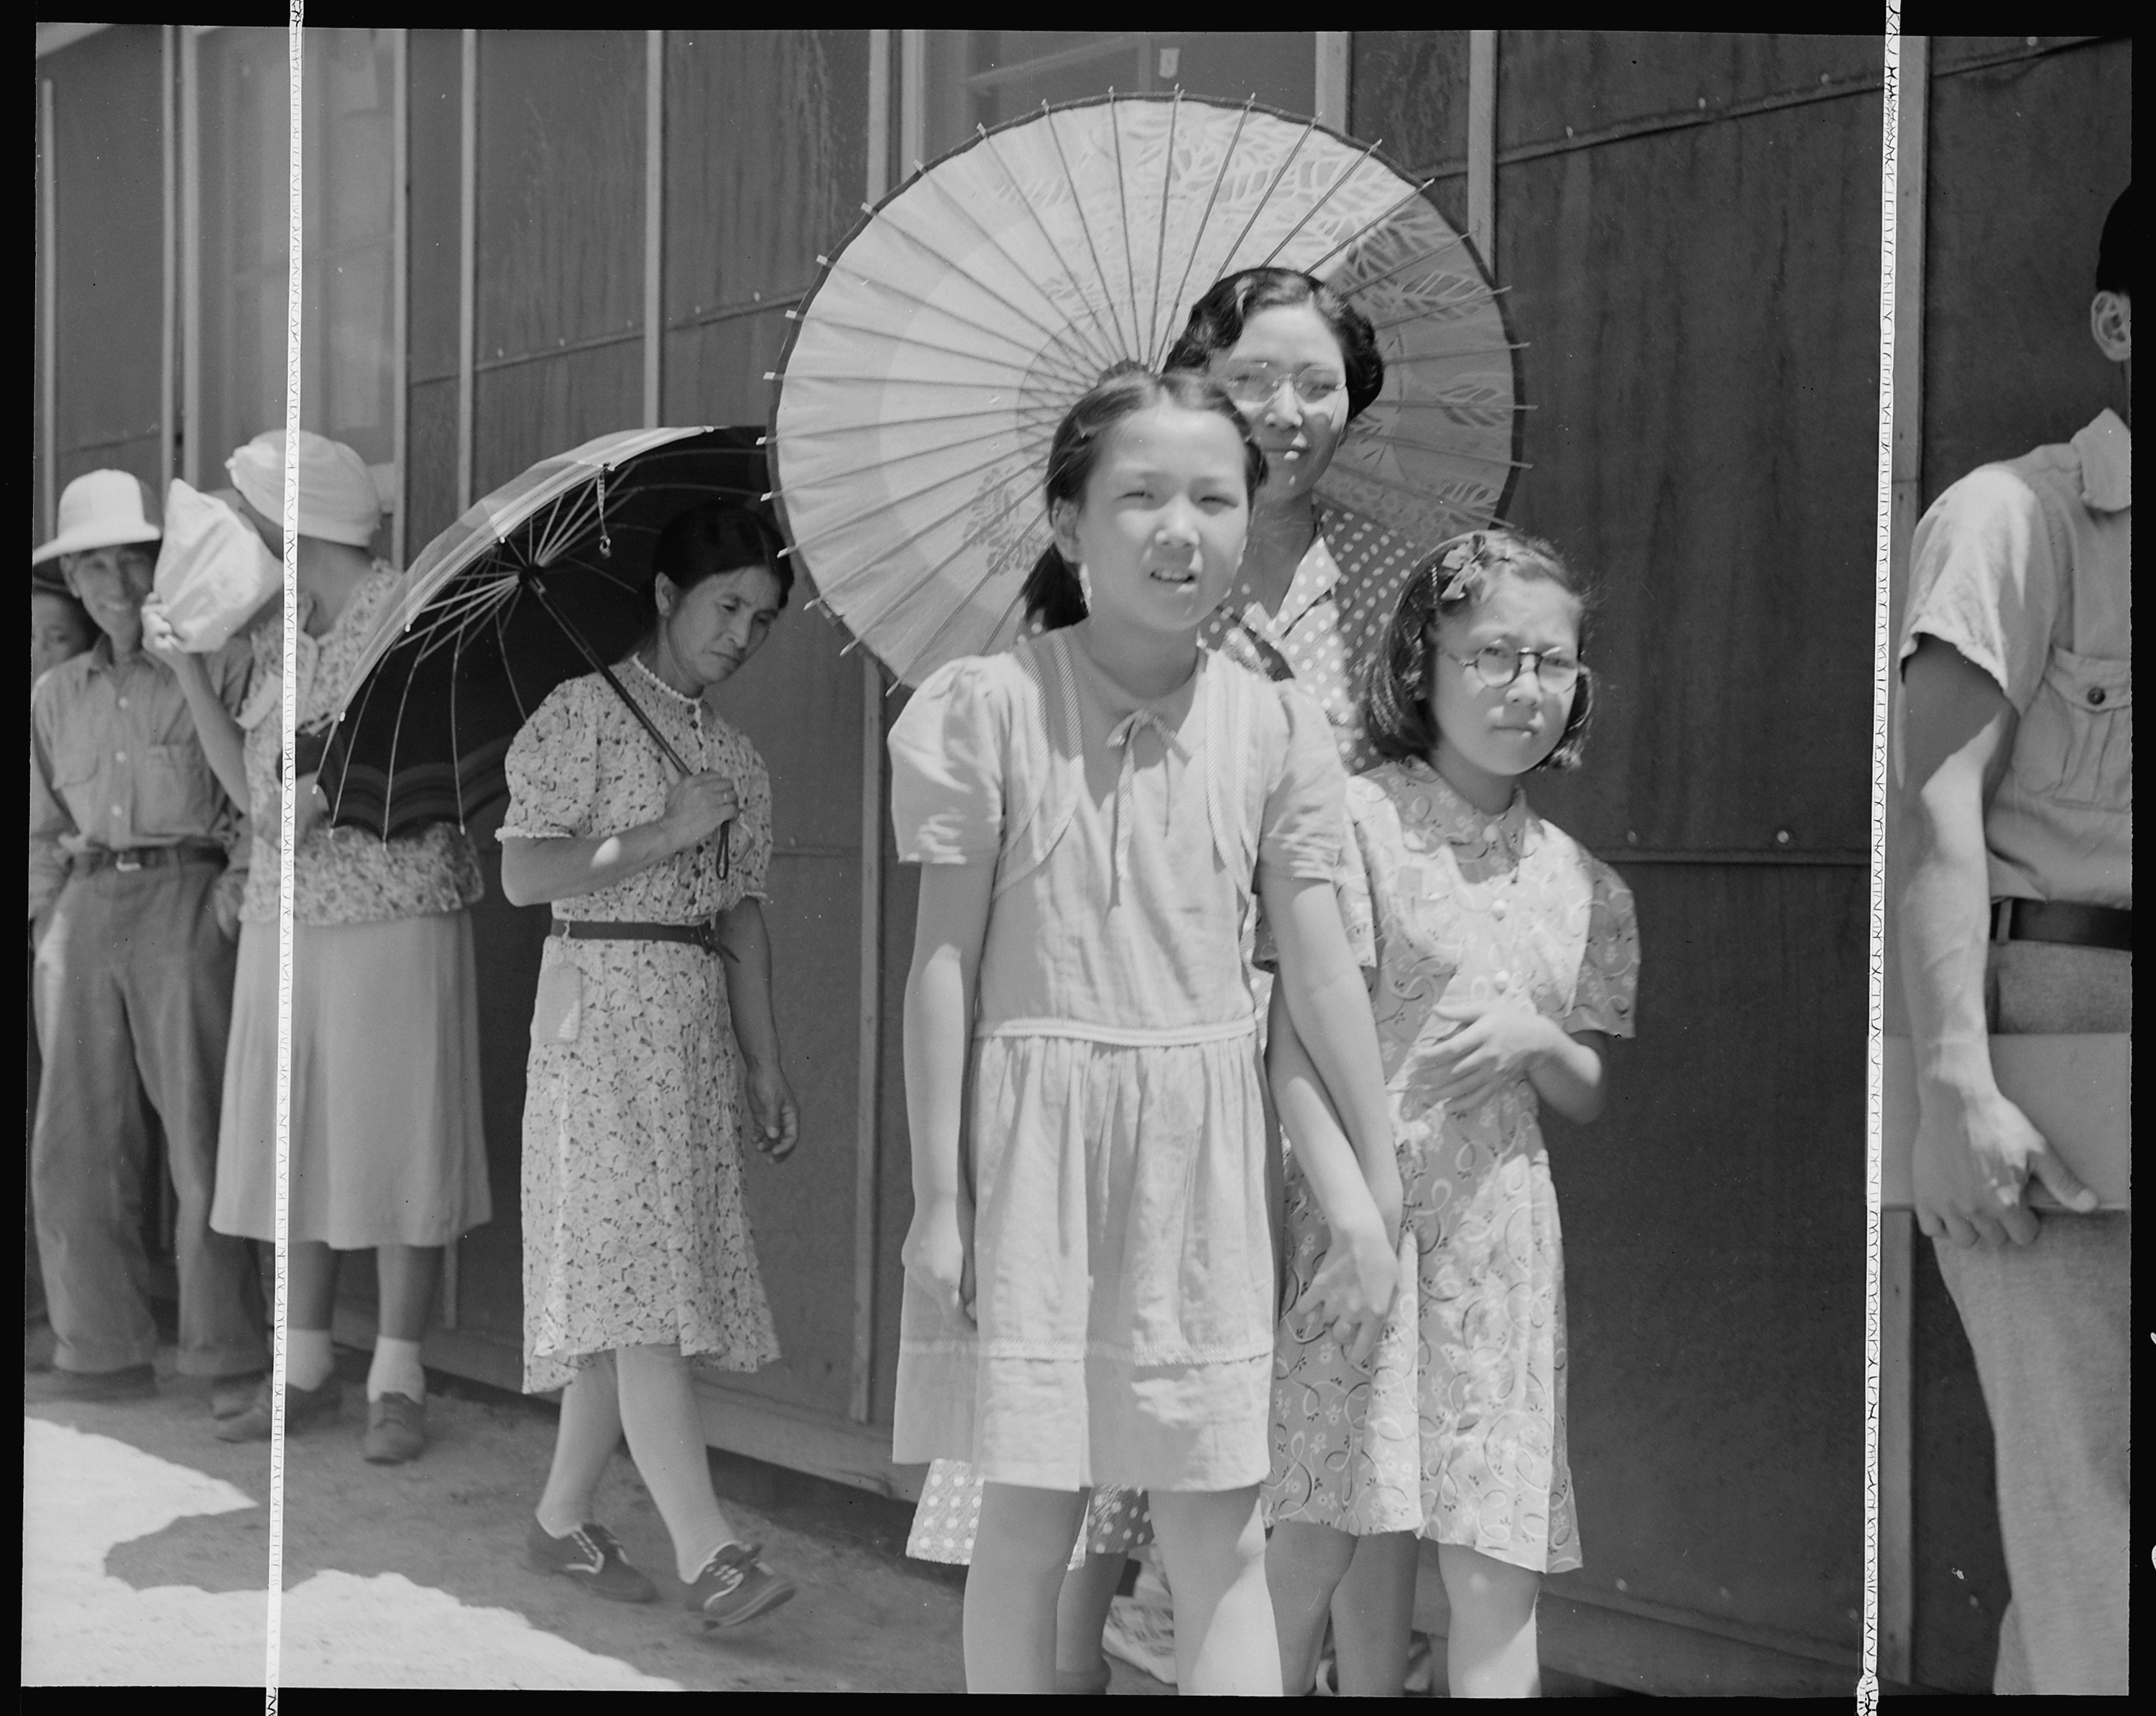 https://www.nps.gov/manz/learn/historyculture/japanese-americans-at-manzanar.htm